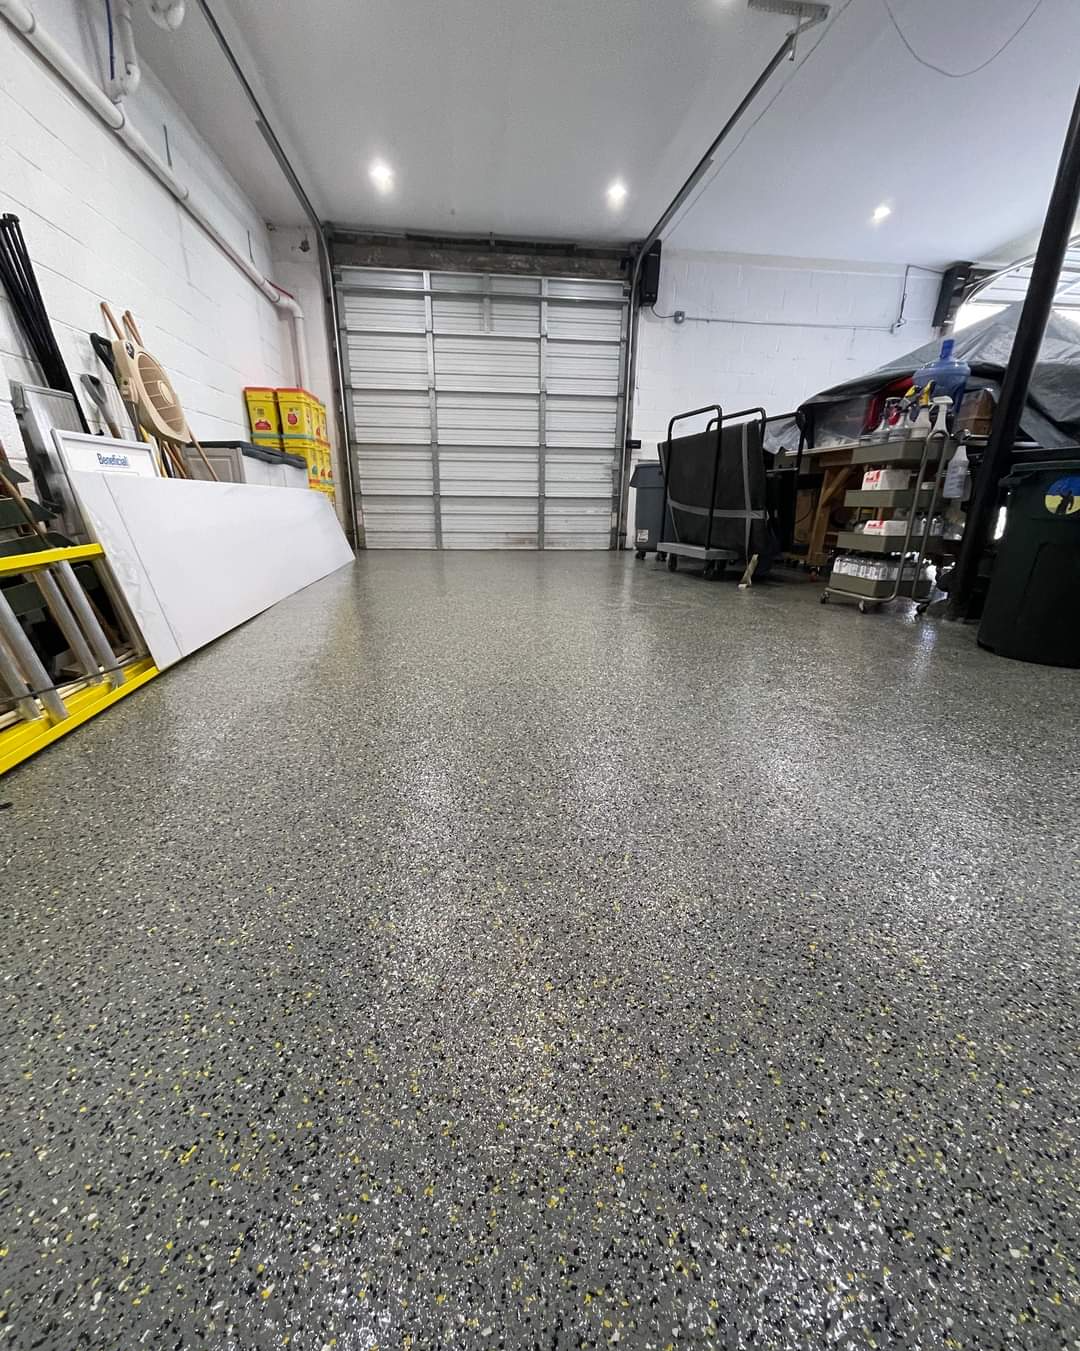 This garage floor looks sharp with epoxy flooring throughout.